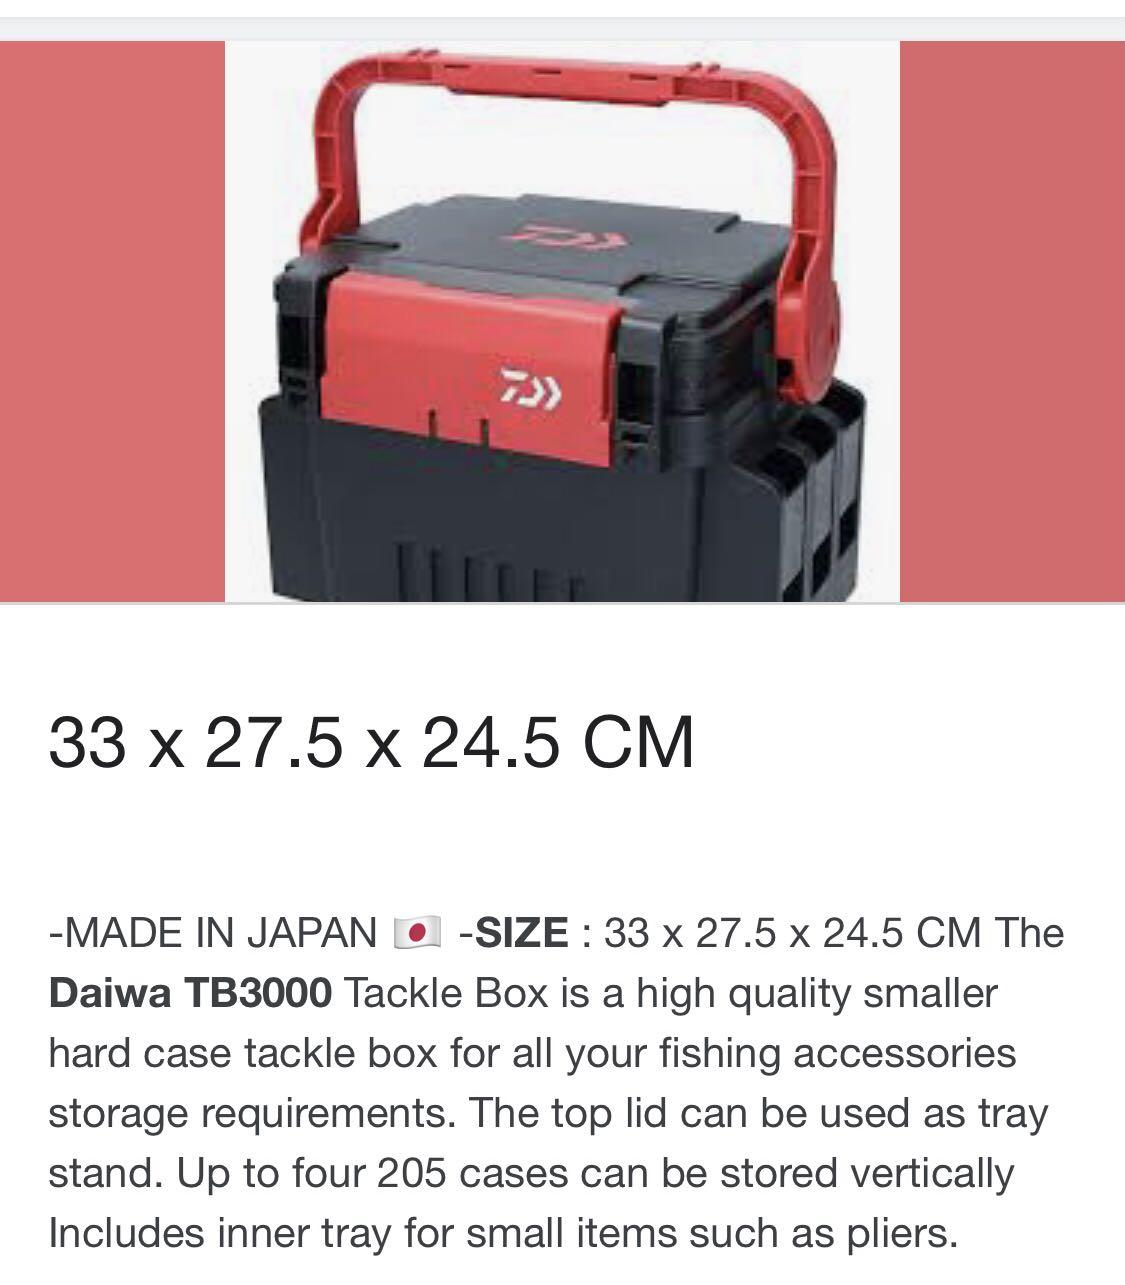 DAIWA TACKLE BOX TB3000 TB4000 MADE IN JAPAN